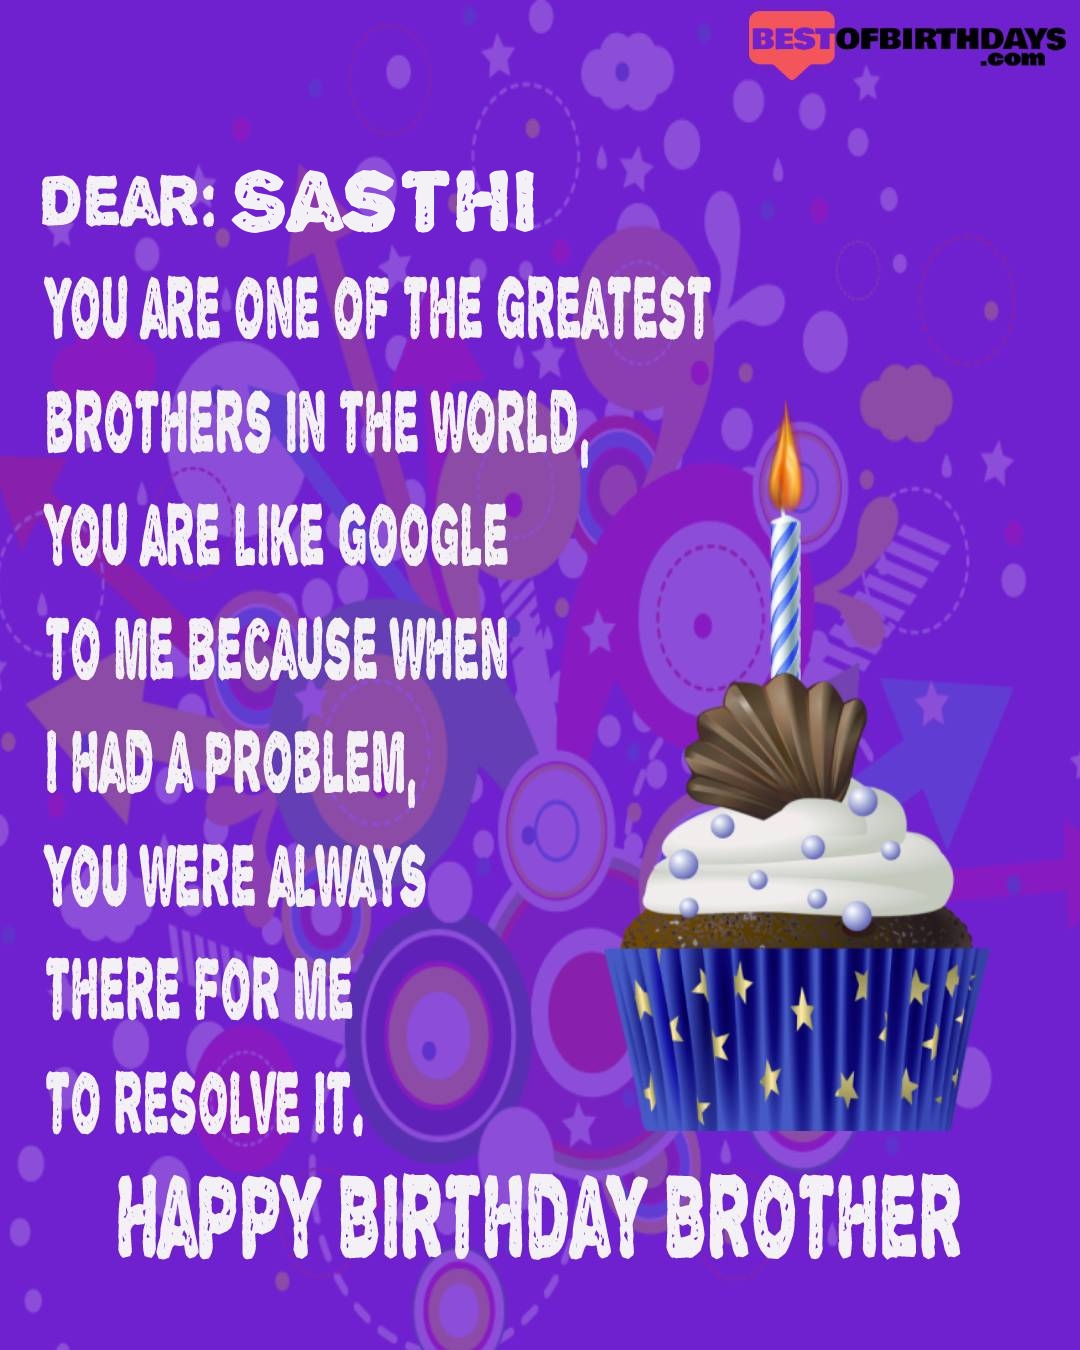 Happy birthday sasthi bhai brother bro